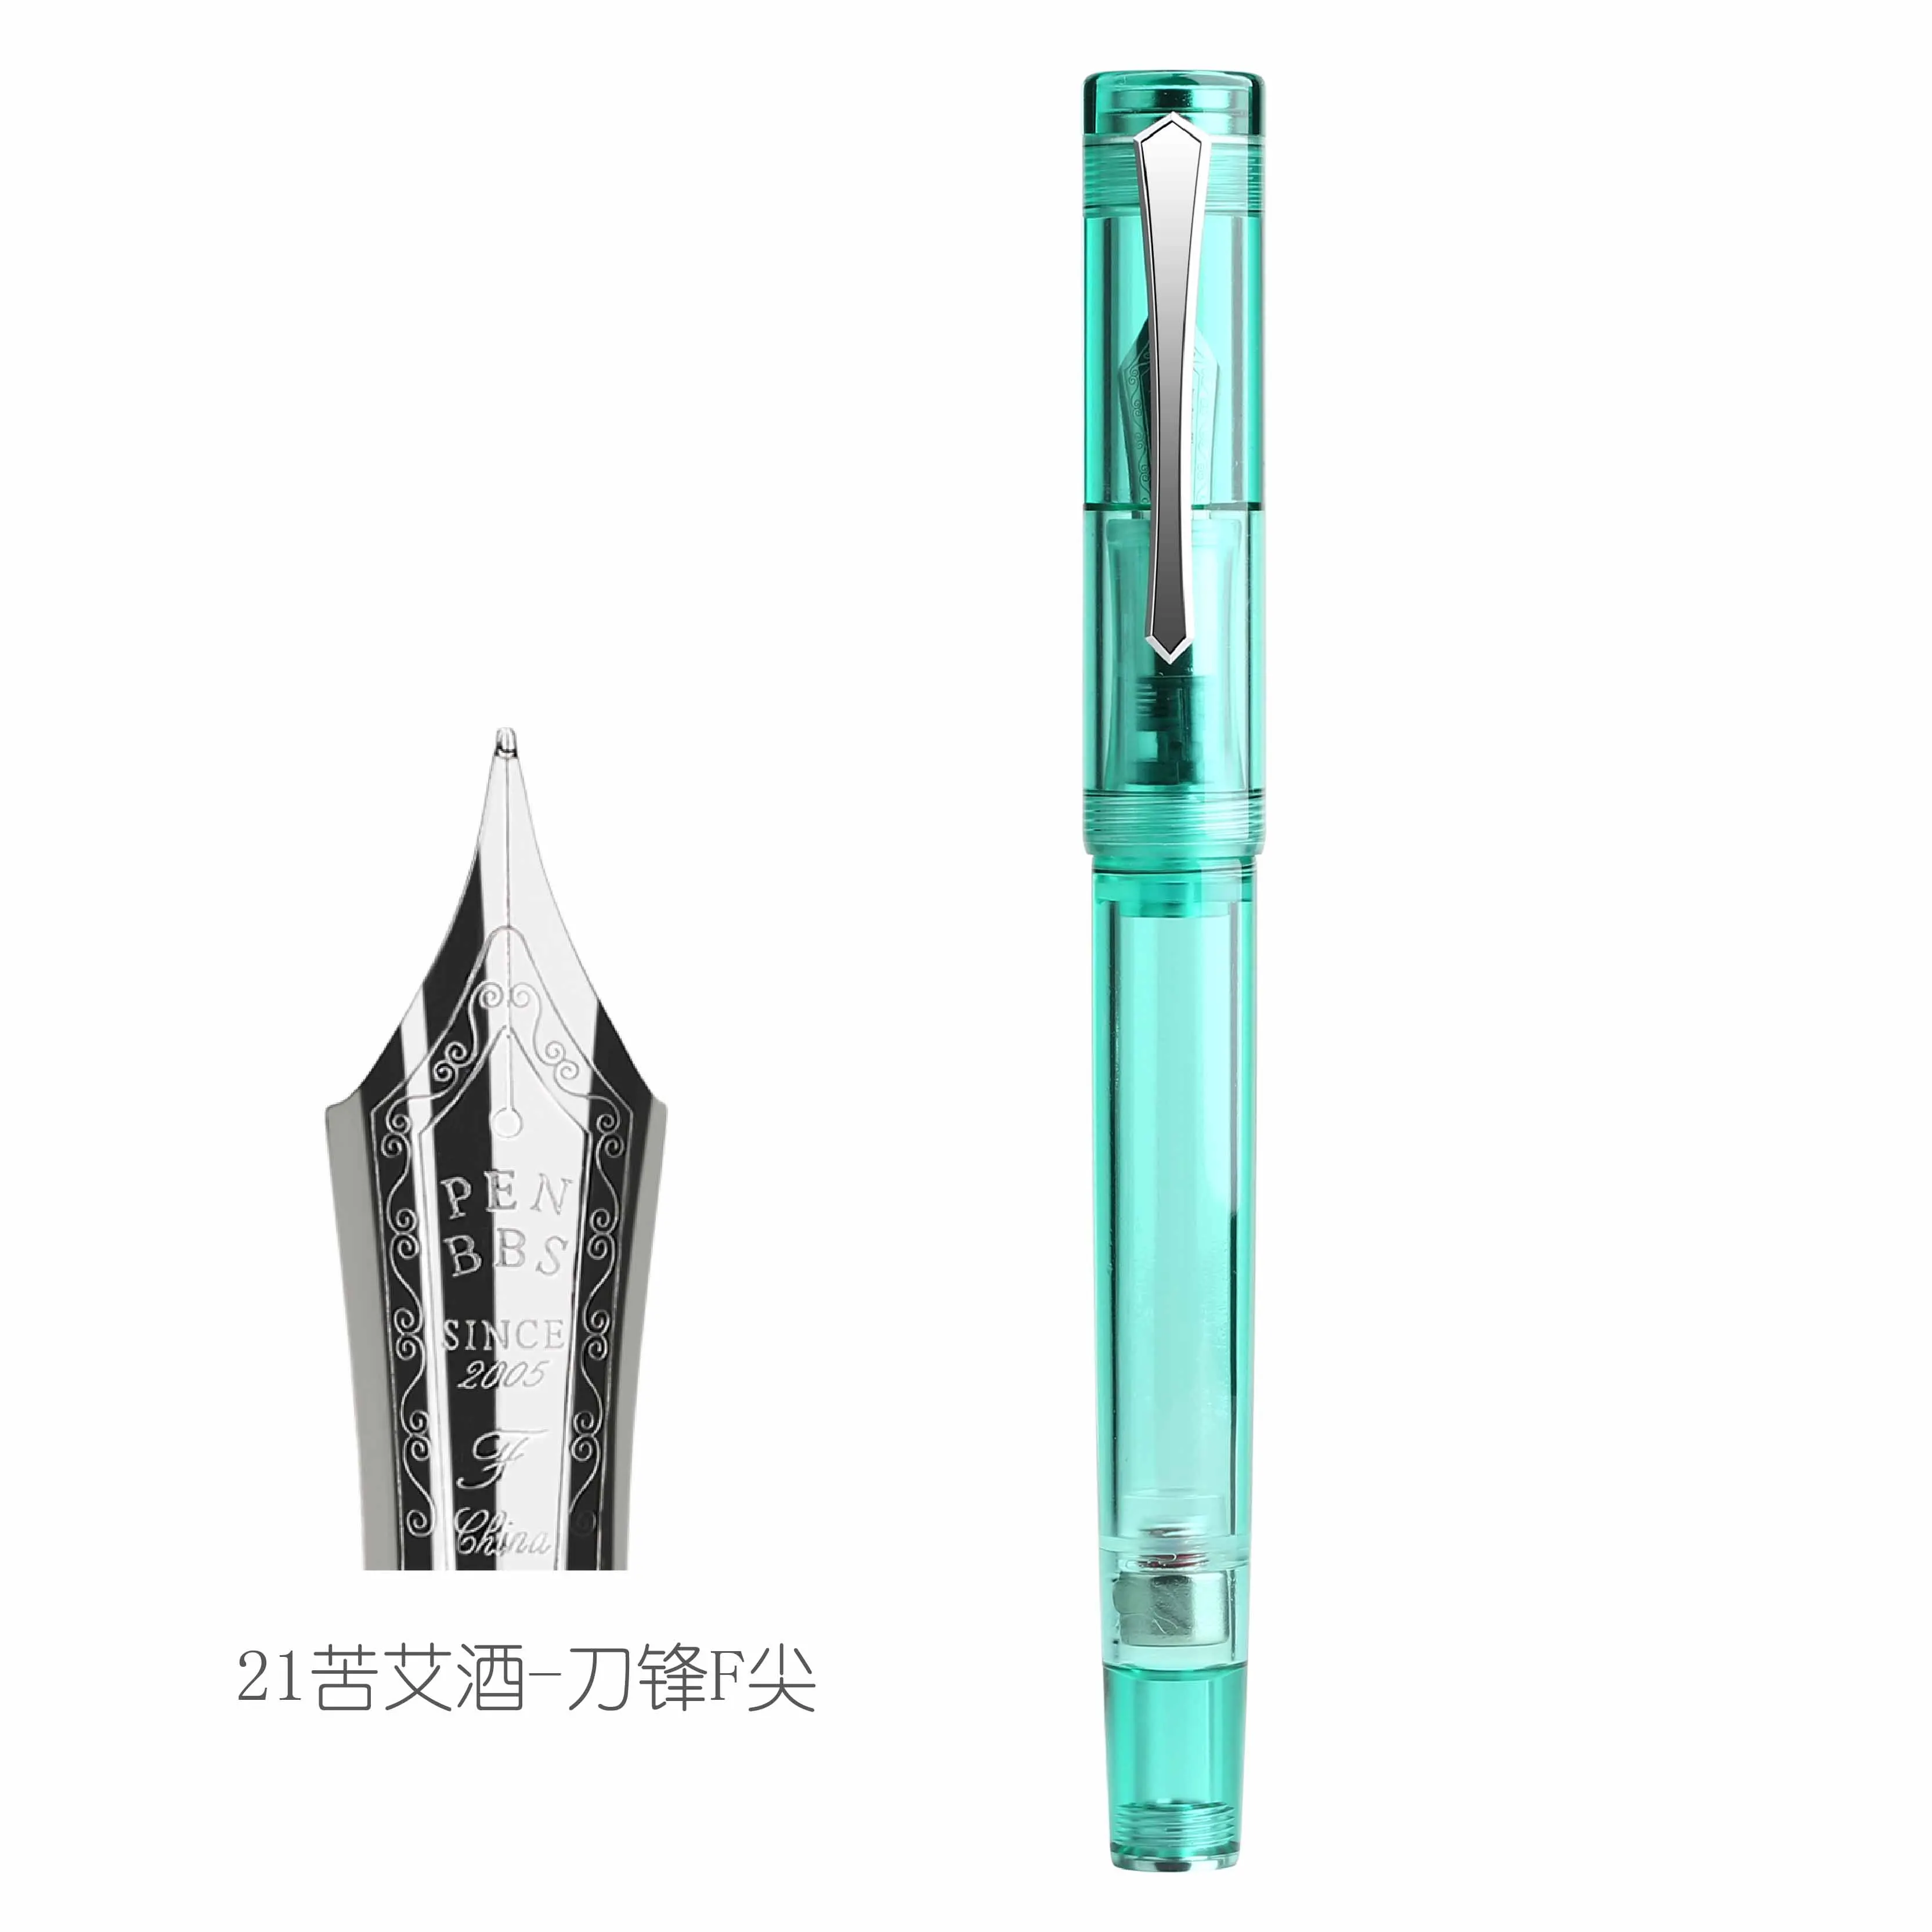 Details about   Penbbs 487-114SF Acrylic Magnetic Piston Fountain Pen Fine Nib Writing Supply #w 